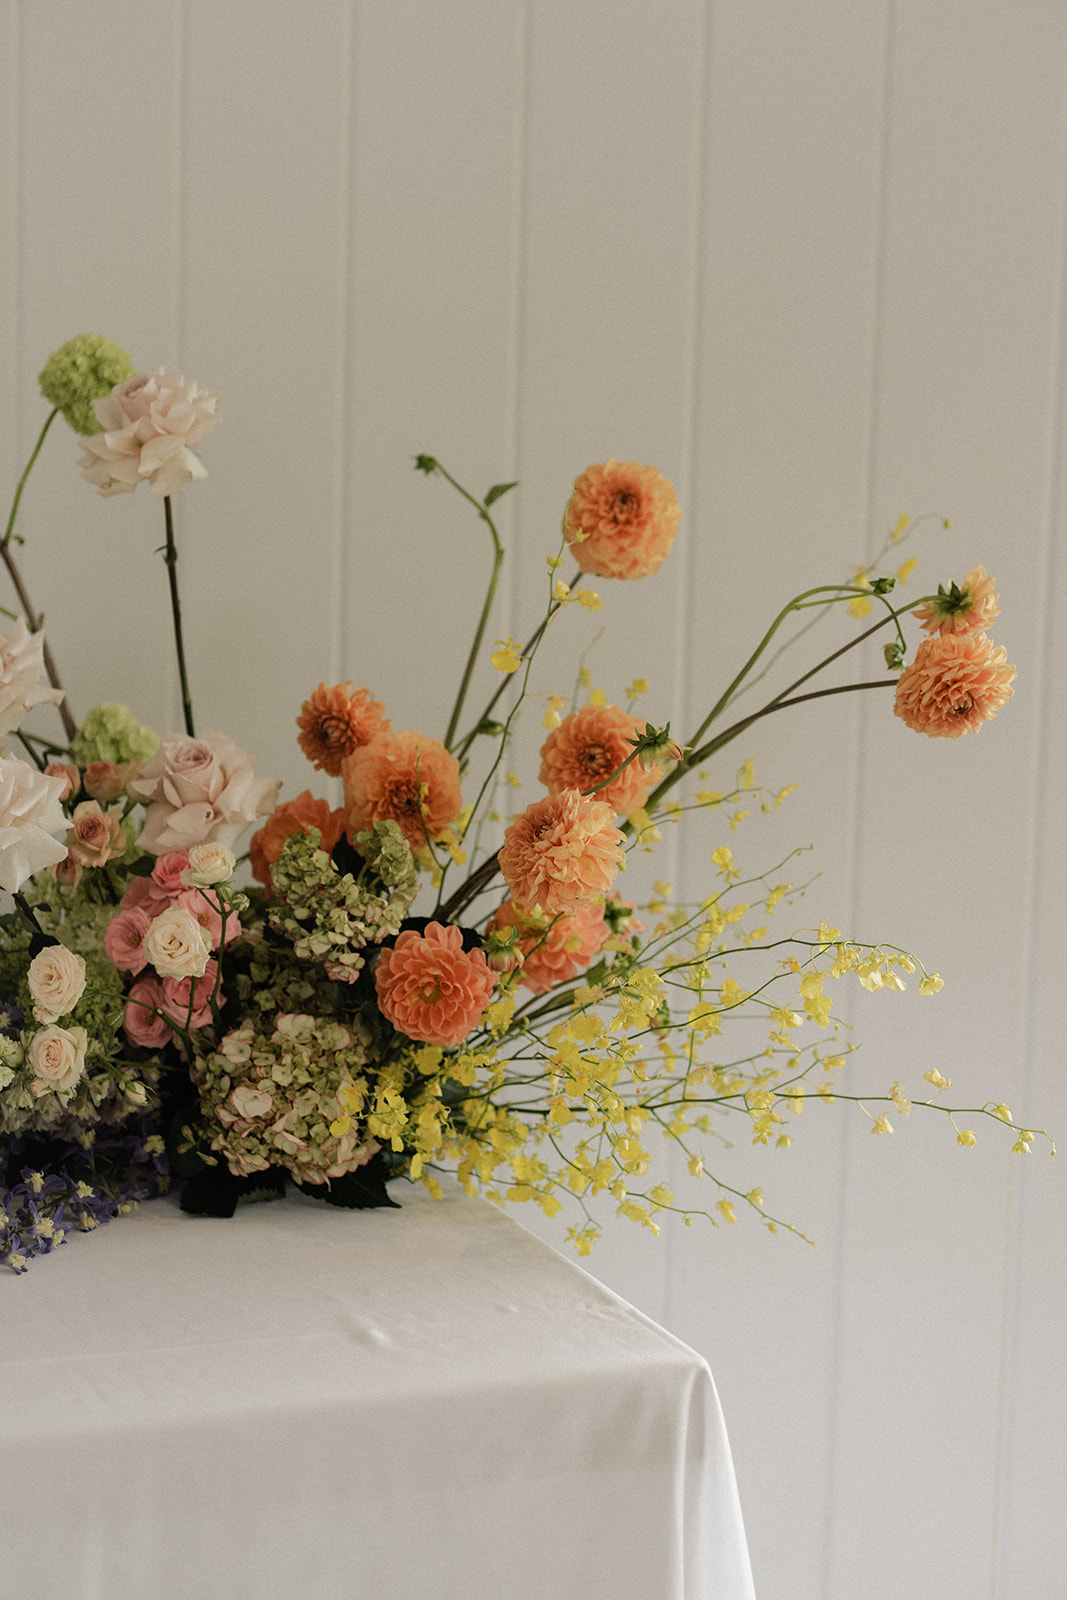 Summergrove Estate Wedding photography Reception bright florals decor